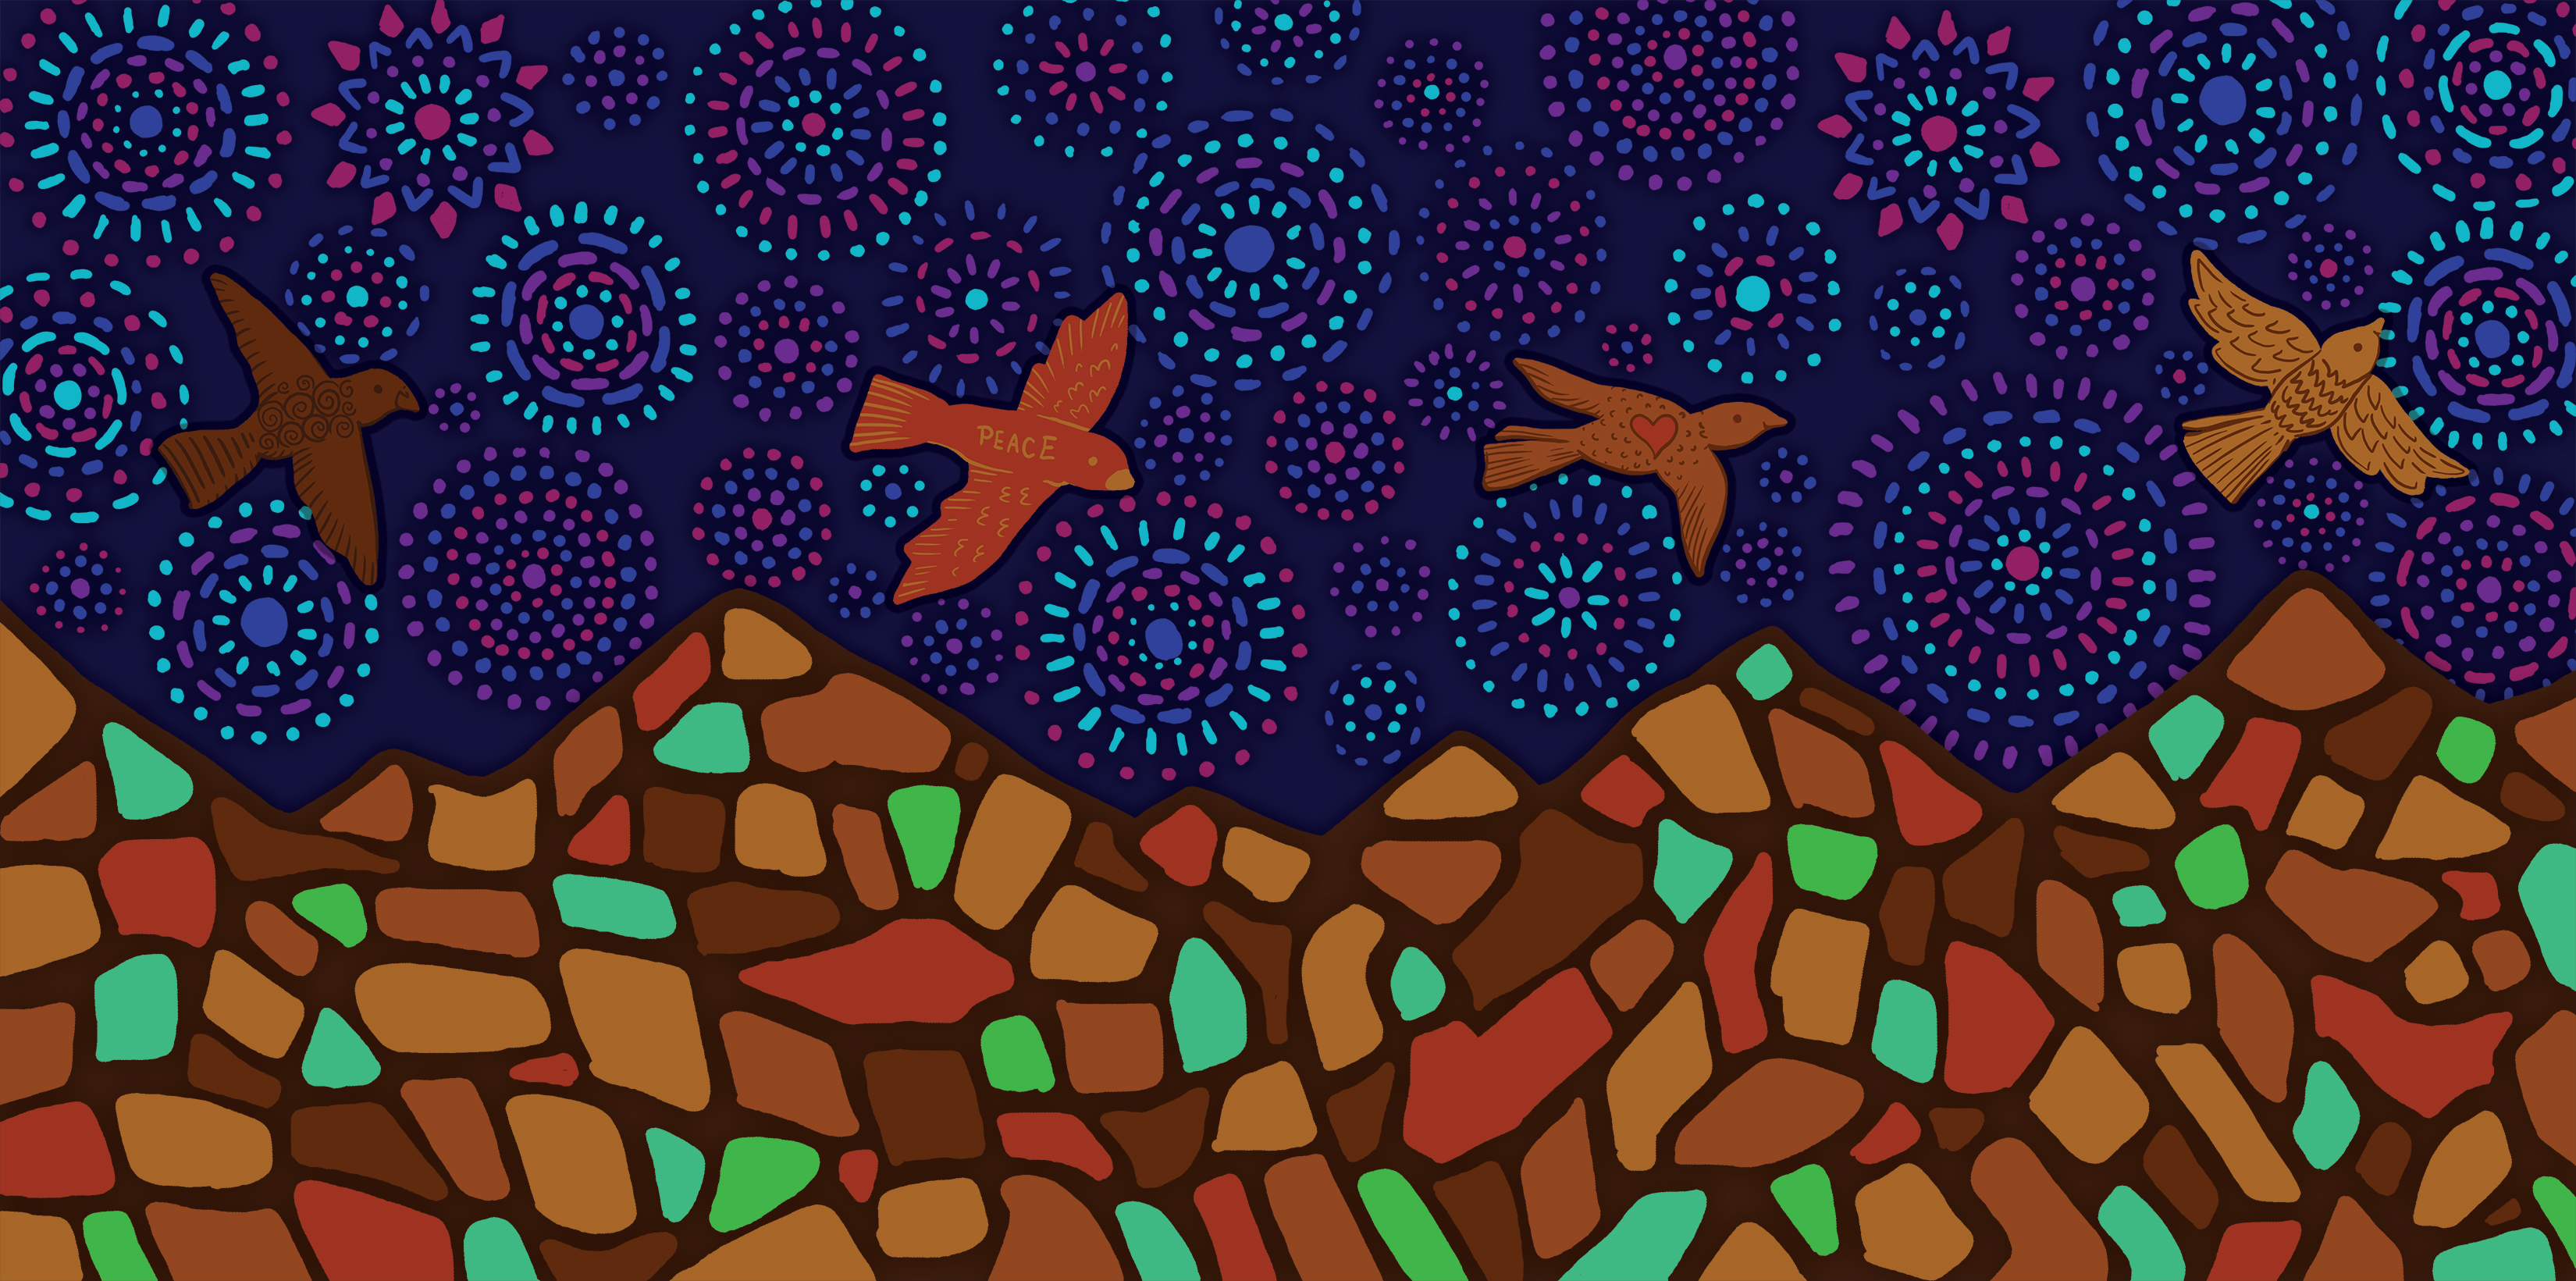 a handdrawn mosaic image by Evan Deery